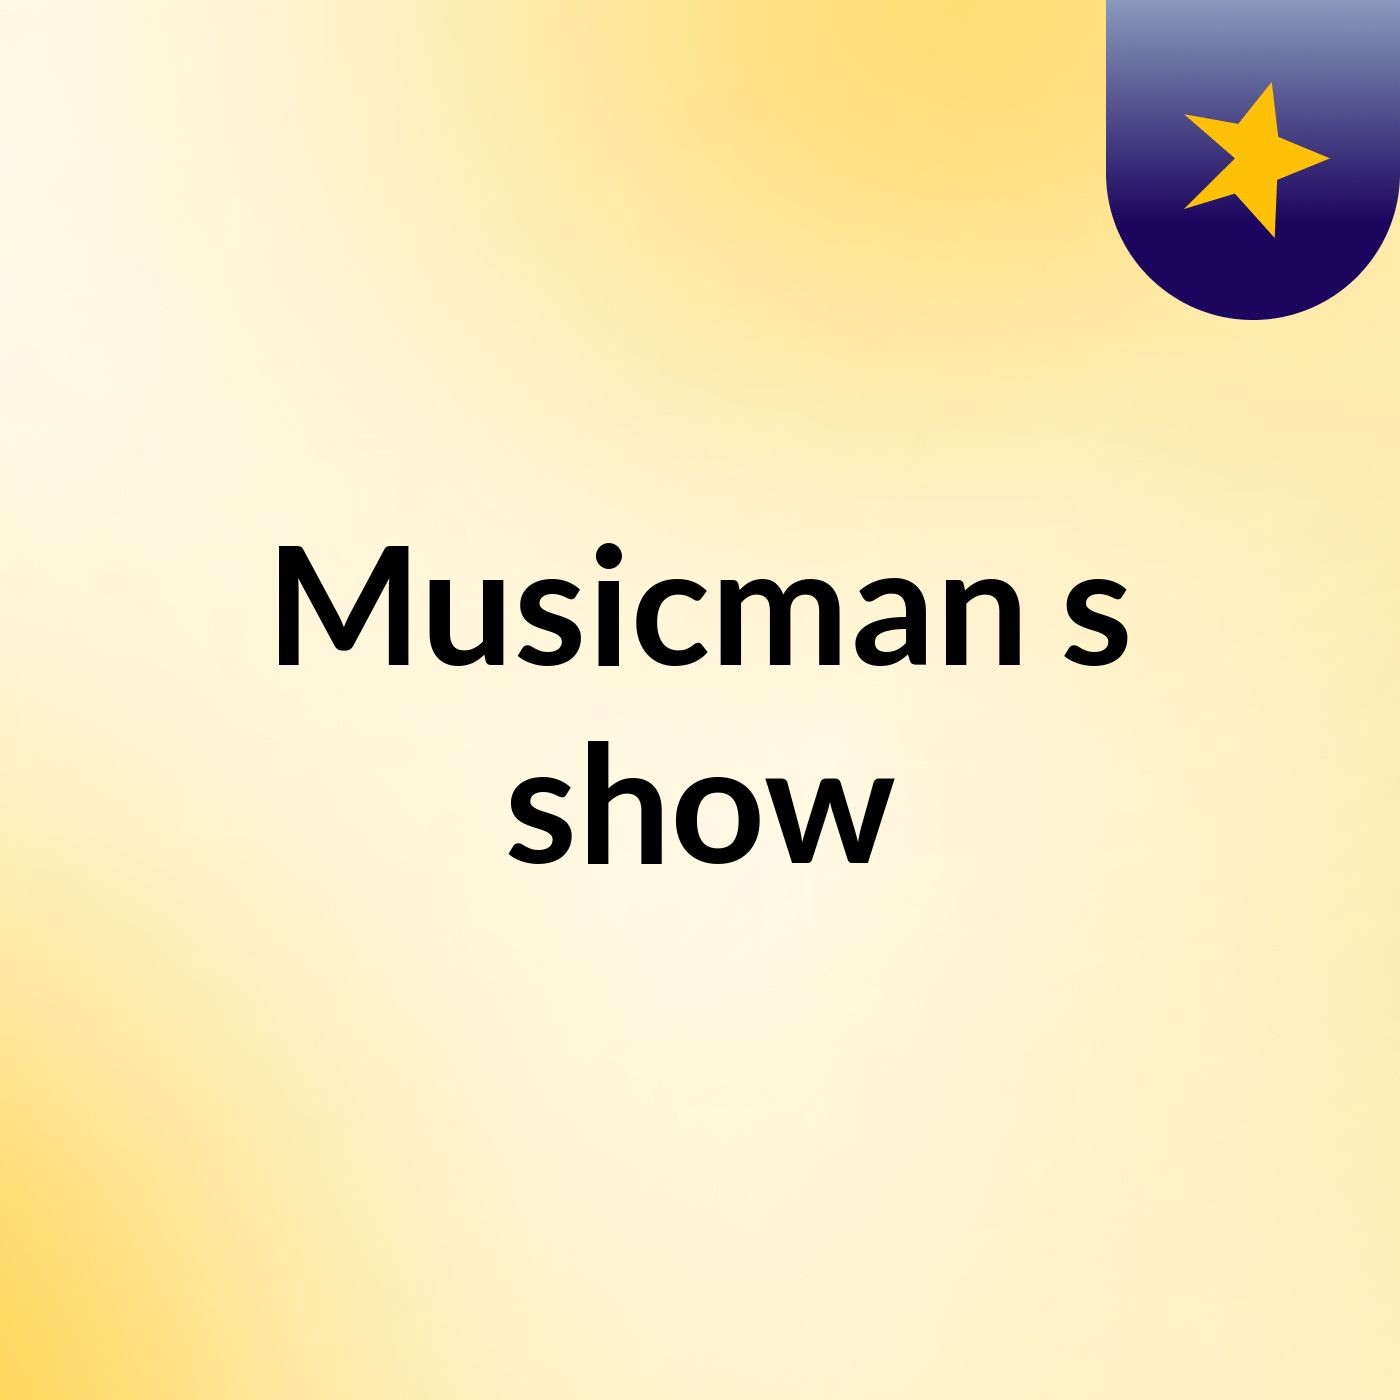 Musicman's show